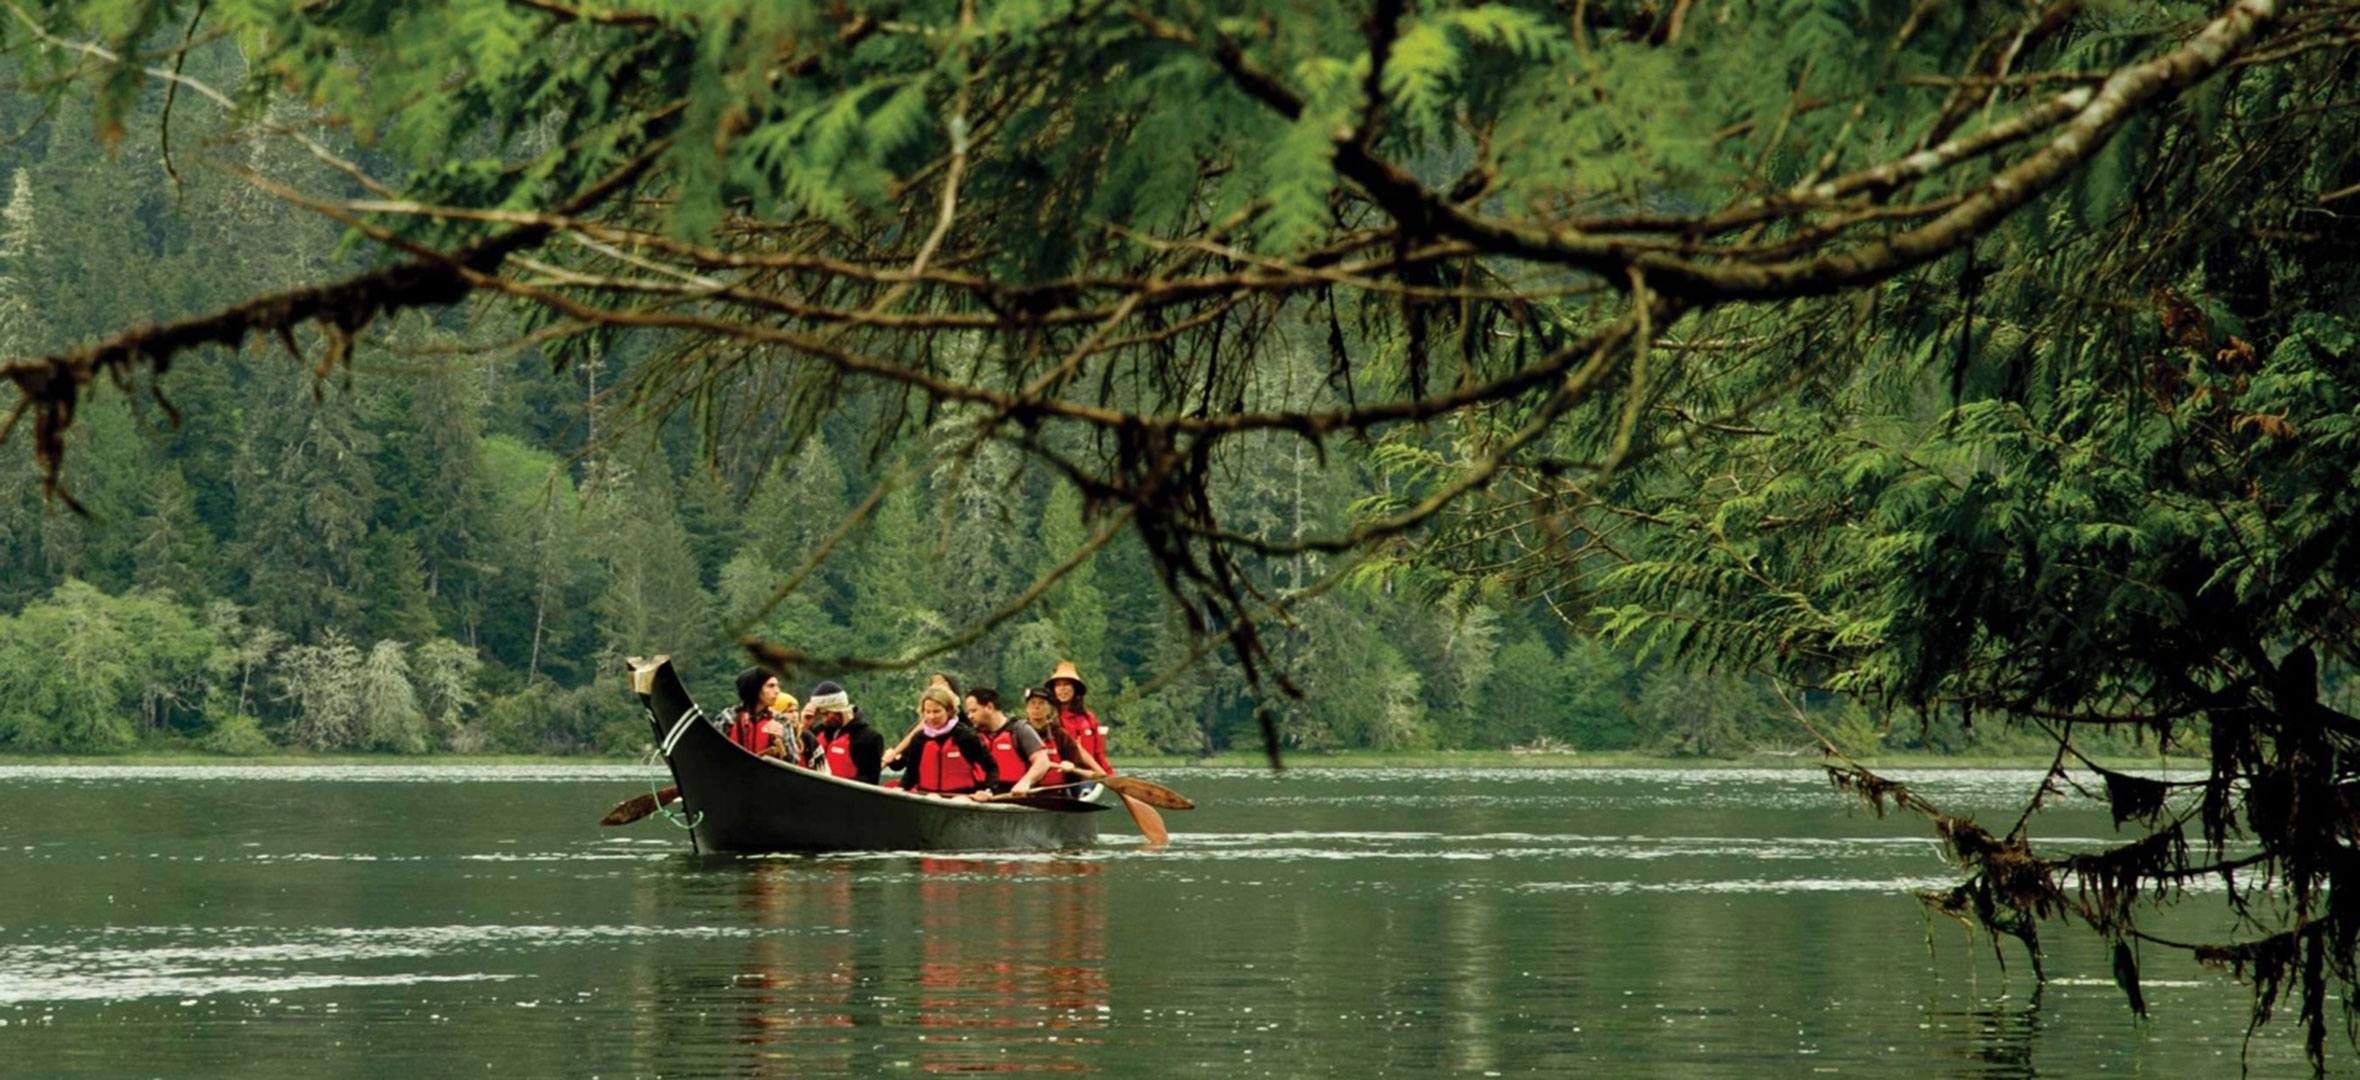 T'ashii Paddle School canoe trip.